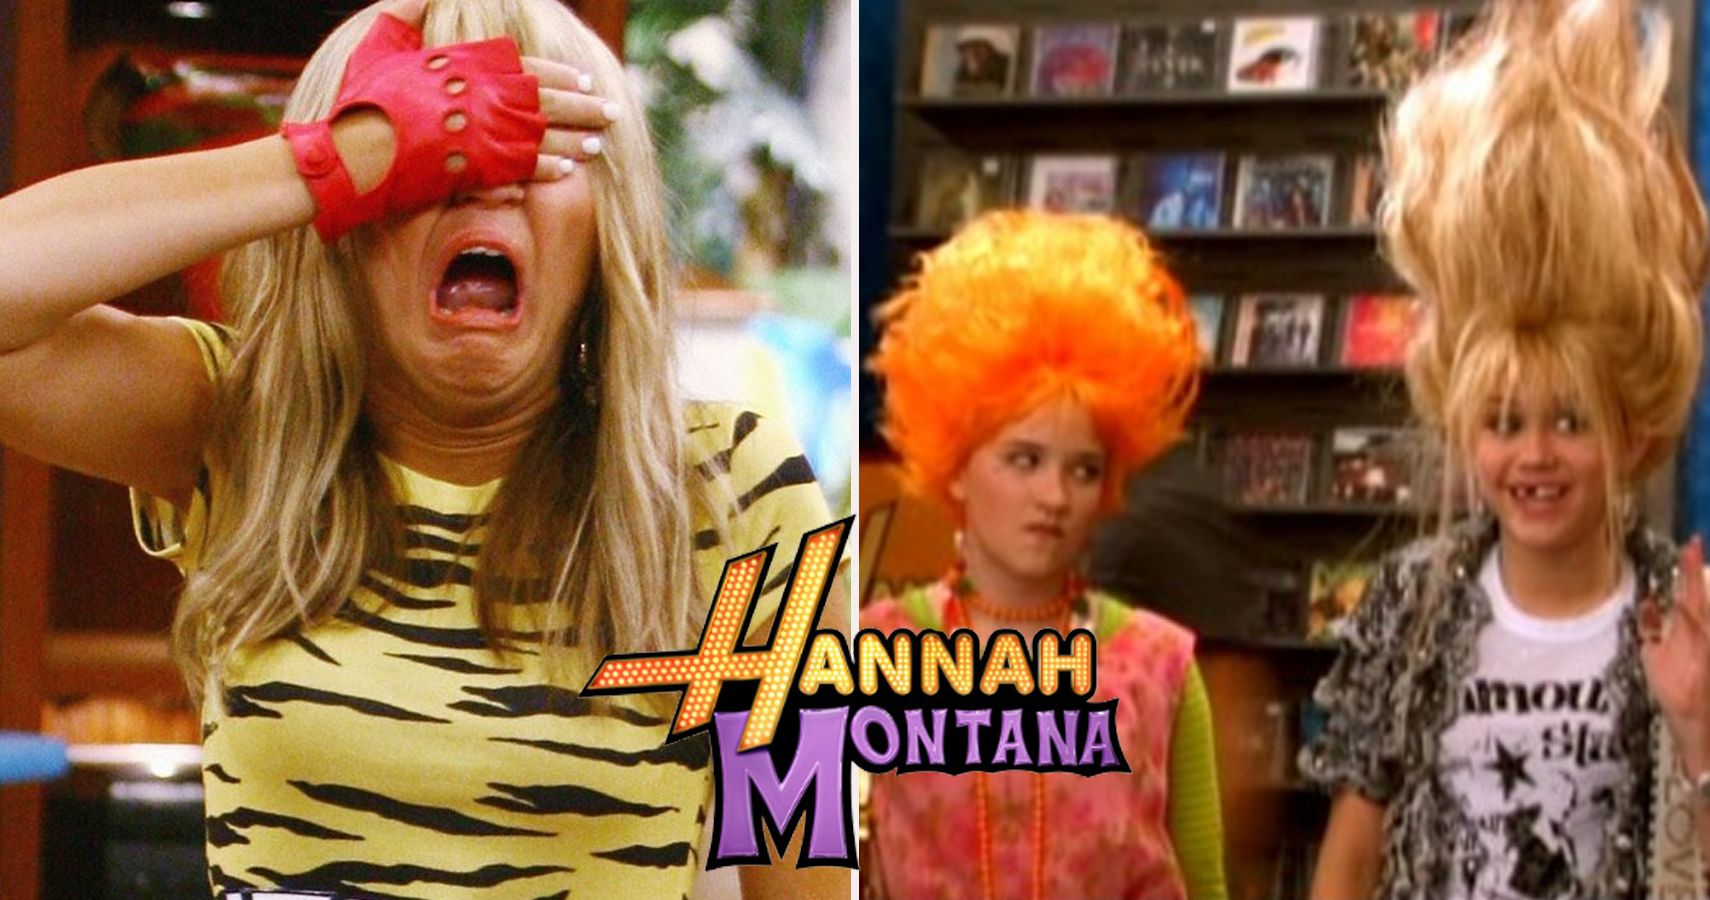 hannah montana season 3 episode 1 online free